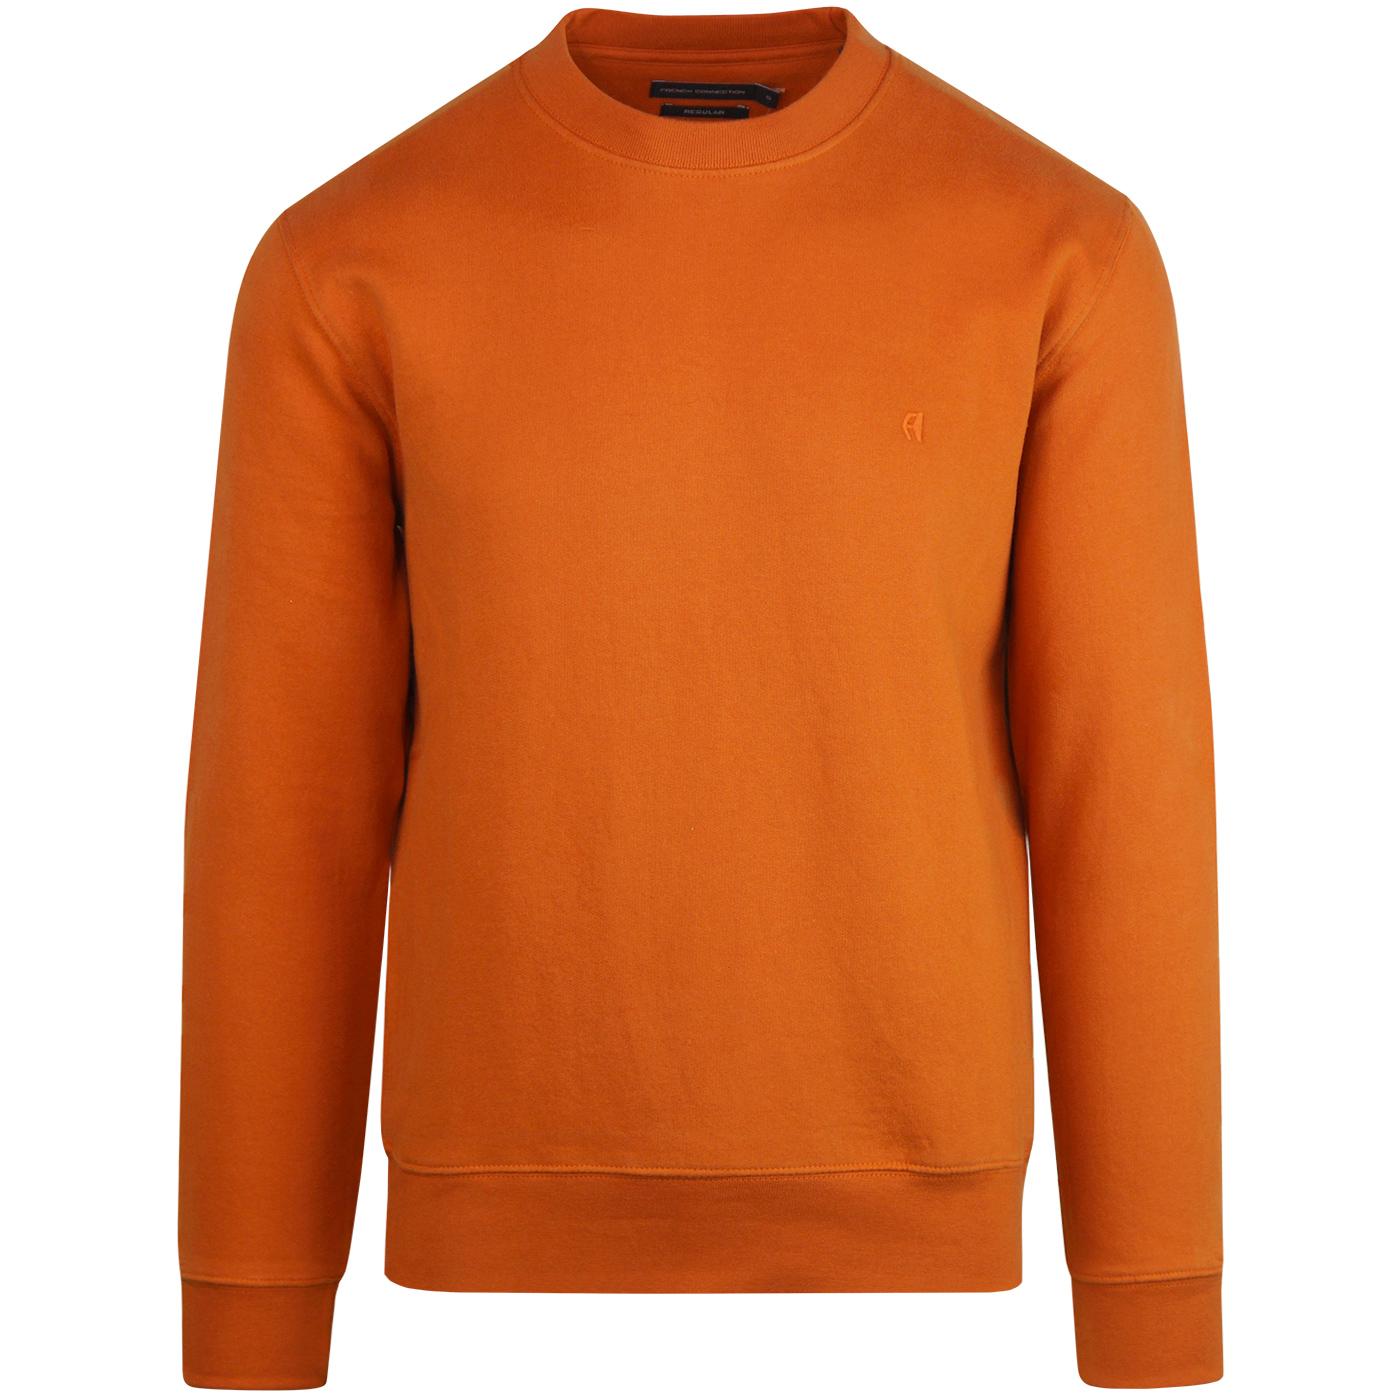 FRENCH CONNECTION Sunday Retro Sweatshirt in Orange